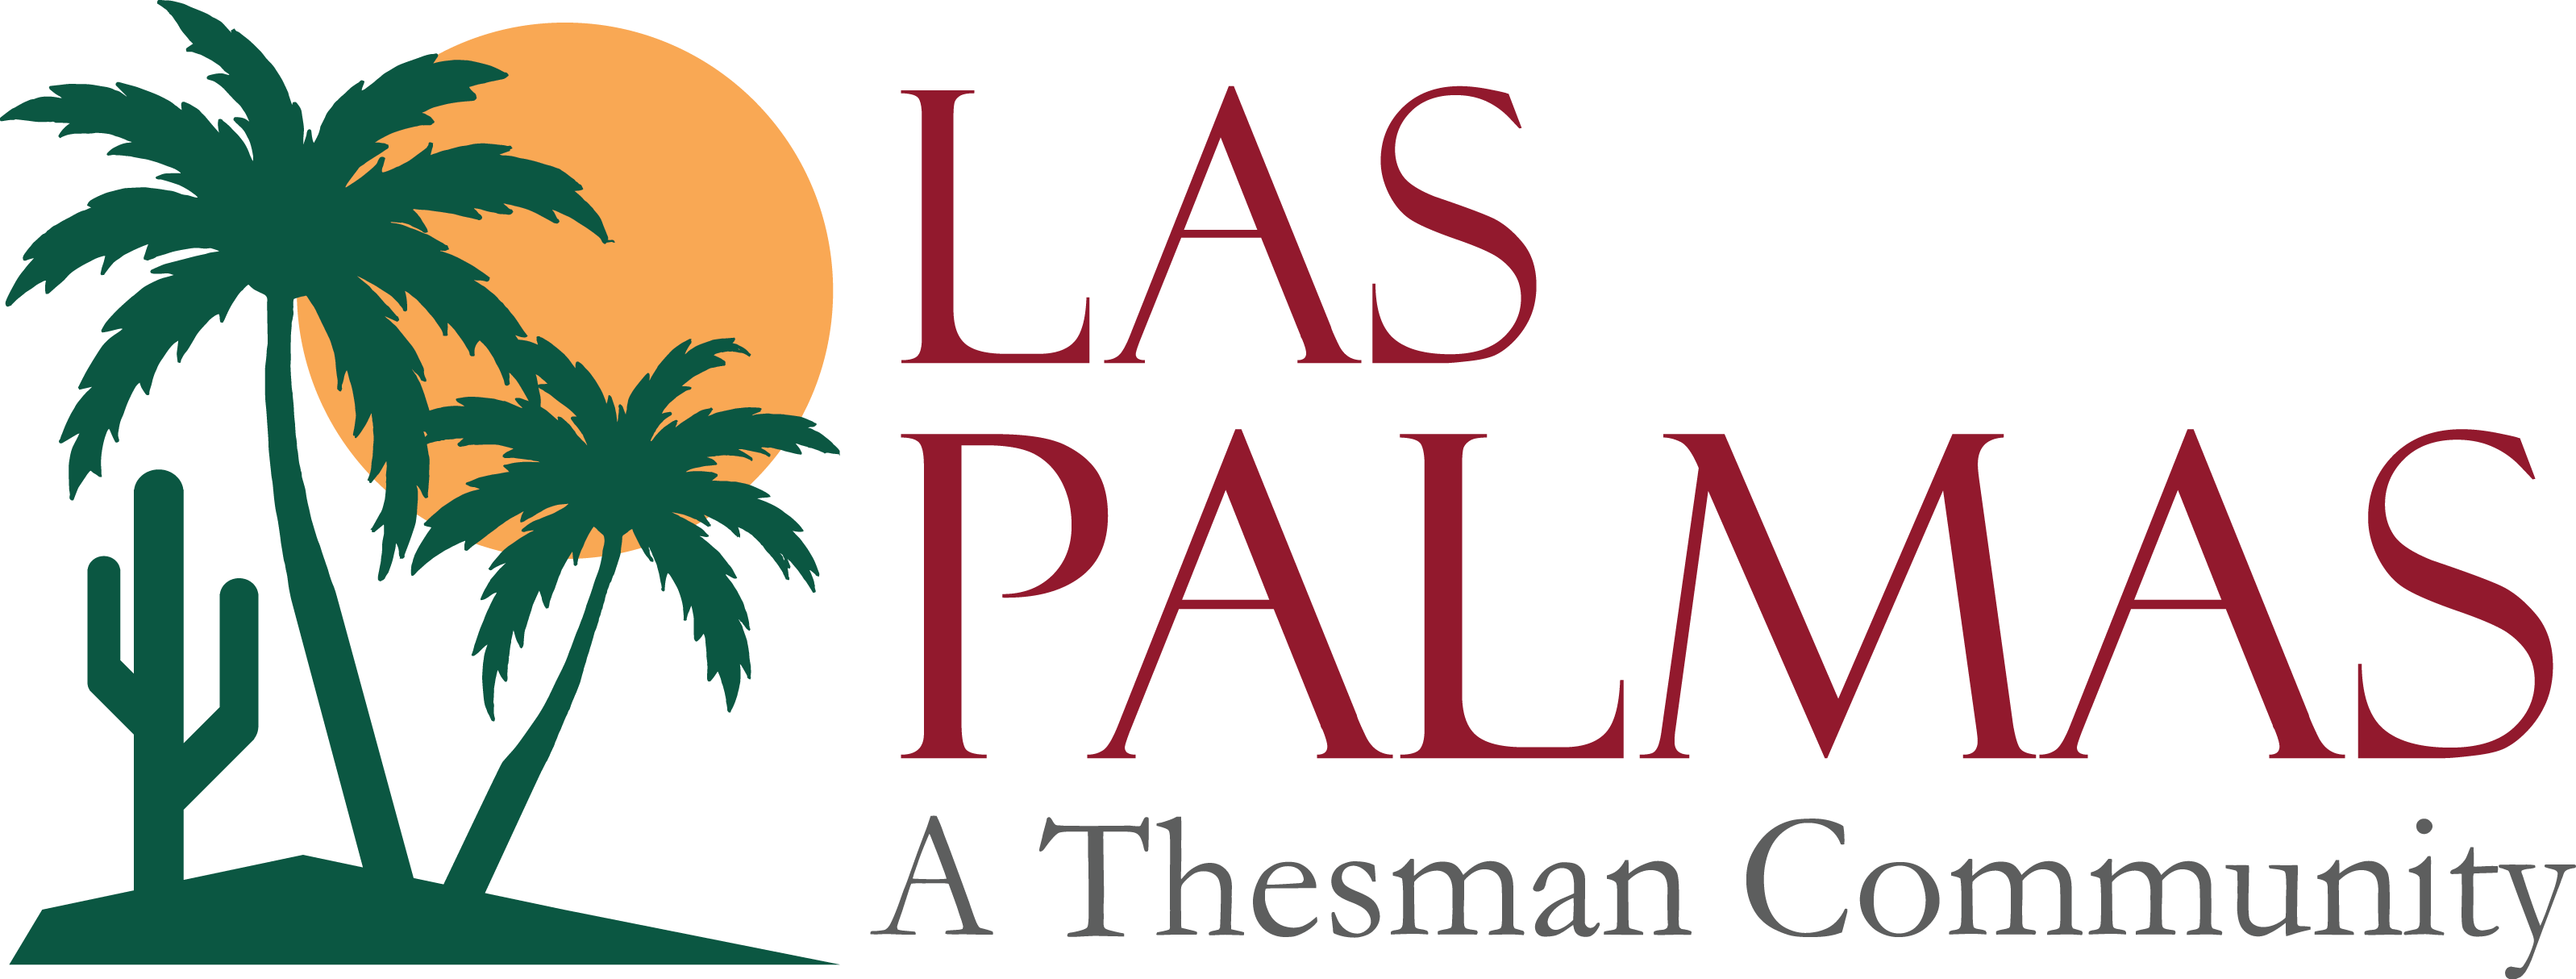 Las Palmas | Active 55 Community | Arizona Thesman Community | AZ